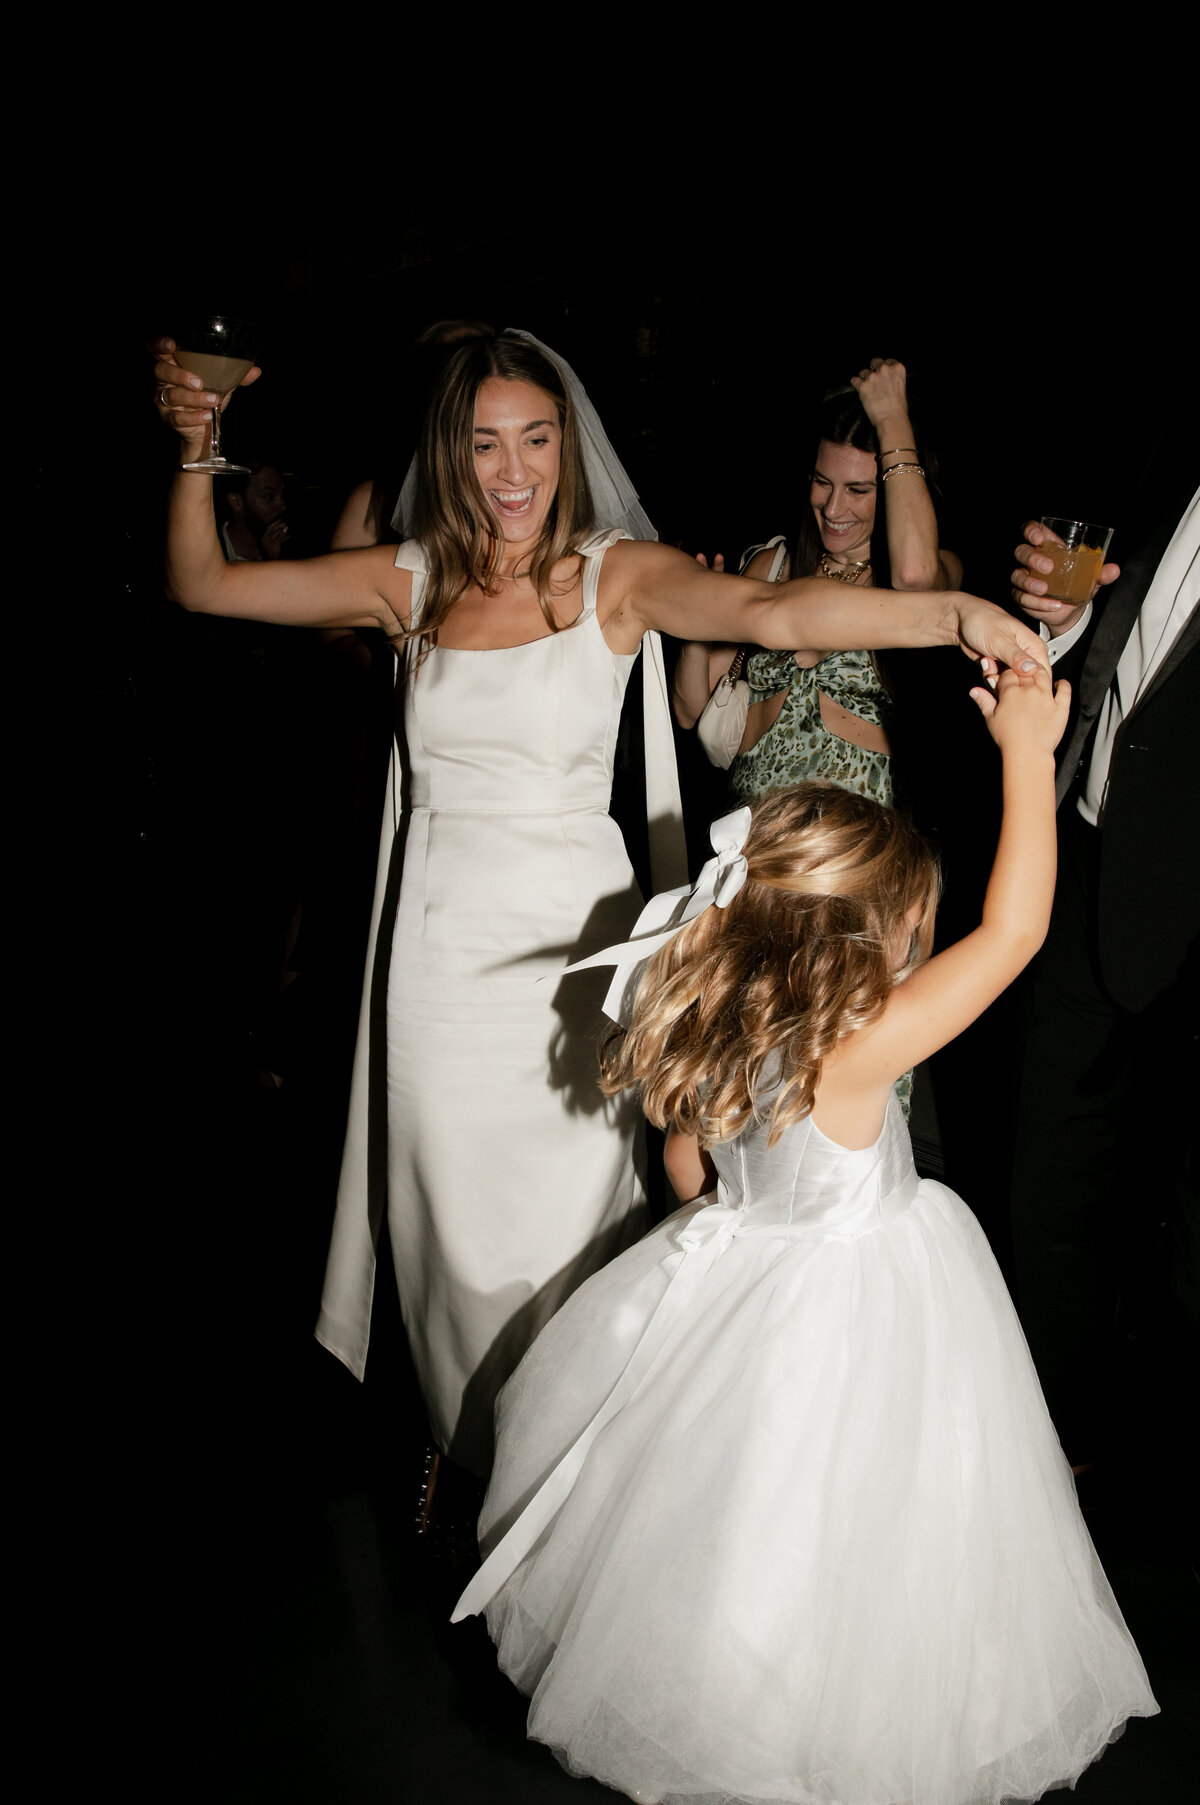 Smiling elegant bride holding wine twirls flower girl on the dance floor while guests dance in the background at Elske Restaurant wedding reception.